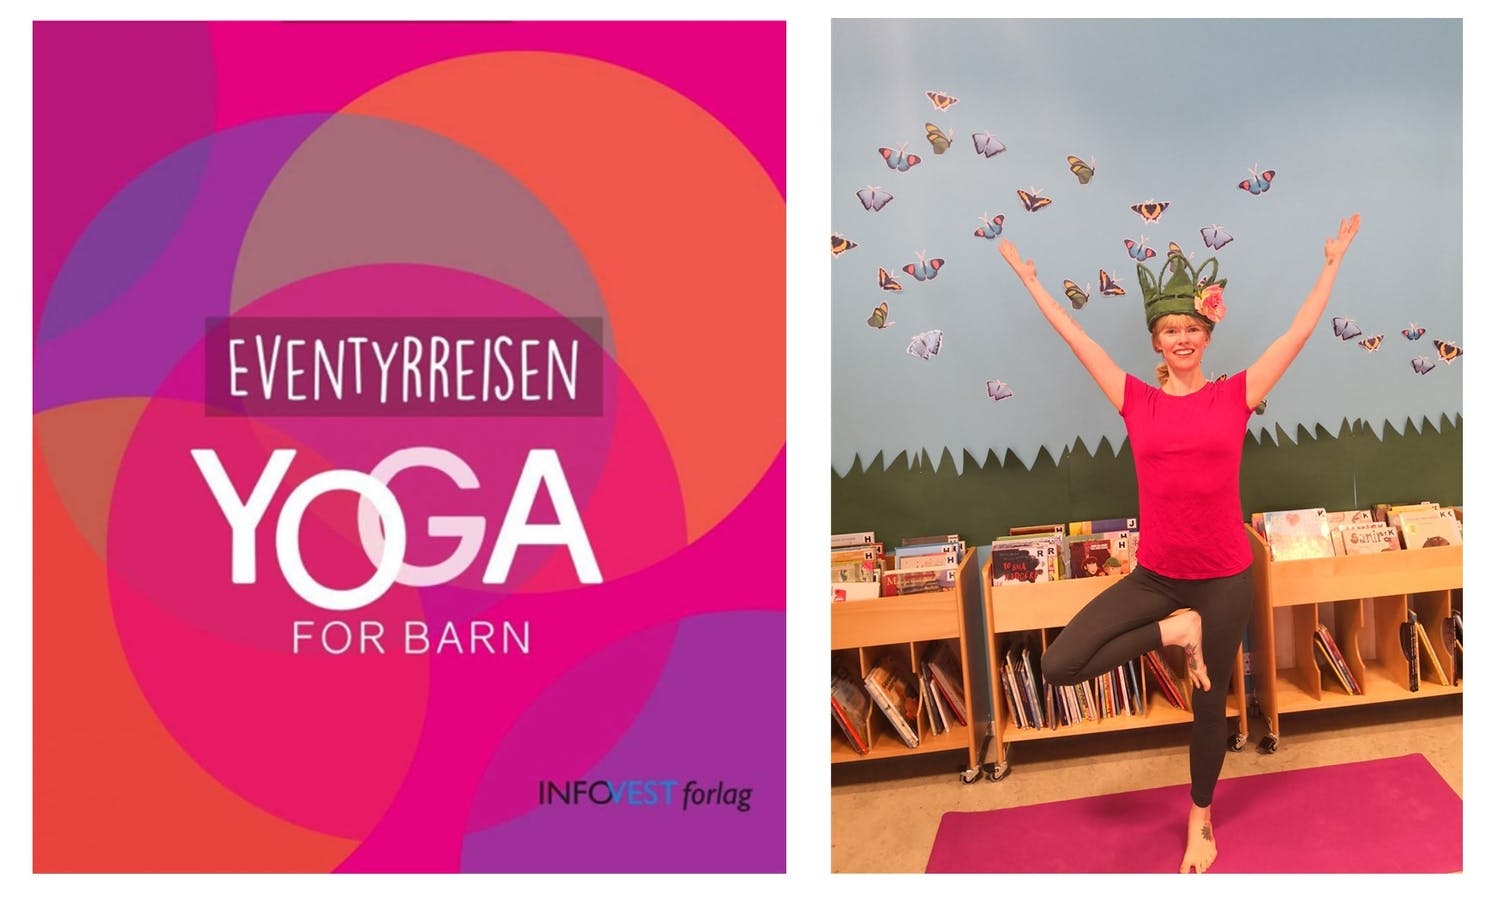 YOGA: Barnebibliotekar Nicoline inviterer til eventyrleg yoga saman med barna. (Foto: Bjørnafjorden bibliotek)